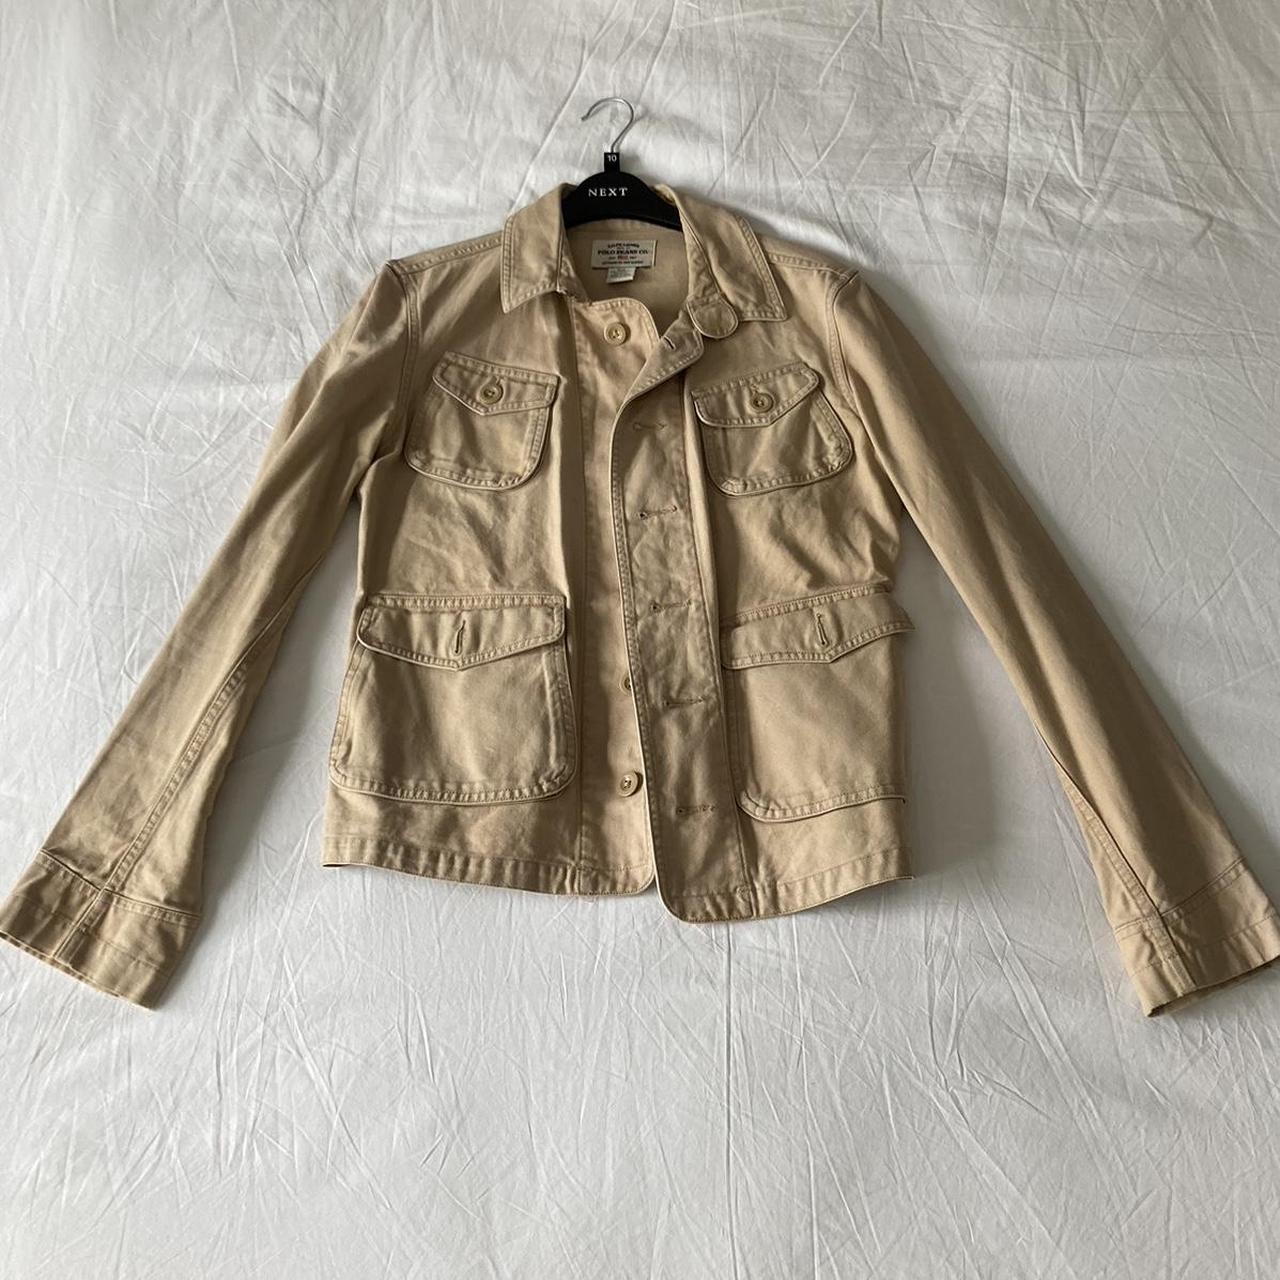 Vintage - genuine - Ralph Lauren unisex jacket in... - Depop